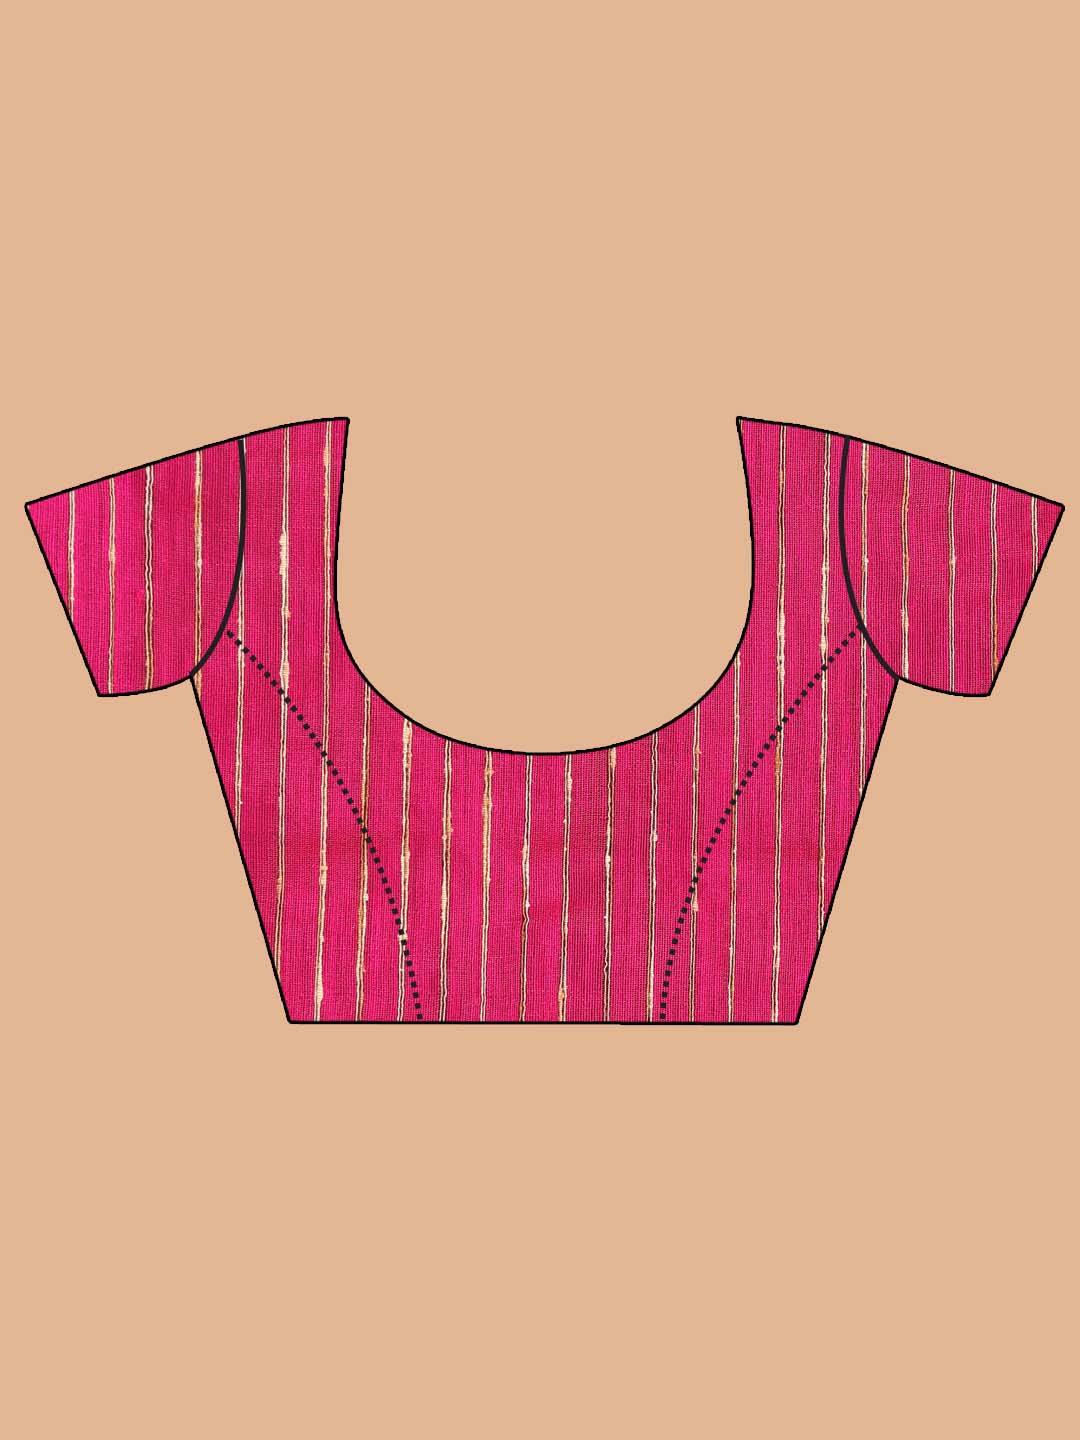 Indethnic Pink Bengal Handloom Cotton Blend Work Saree - Blouse Piece View